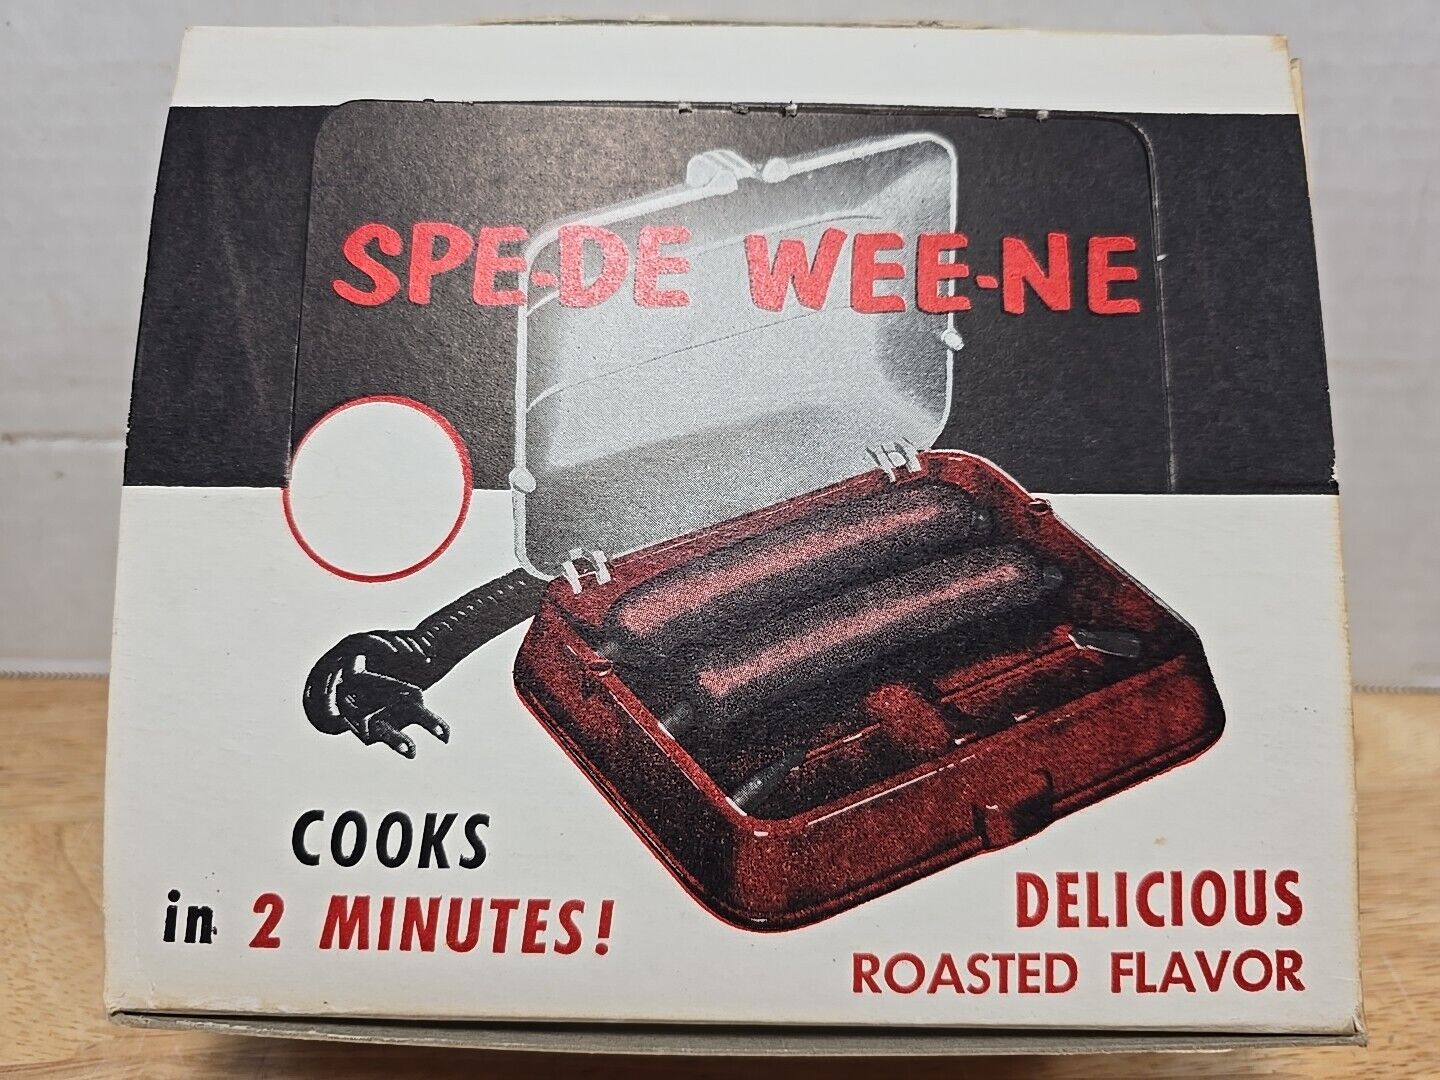 Vintage Counter Display Spe-De Wee-Ne Electric Hot Dog Cooker